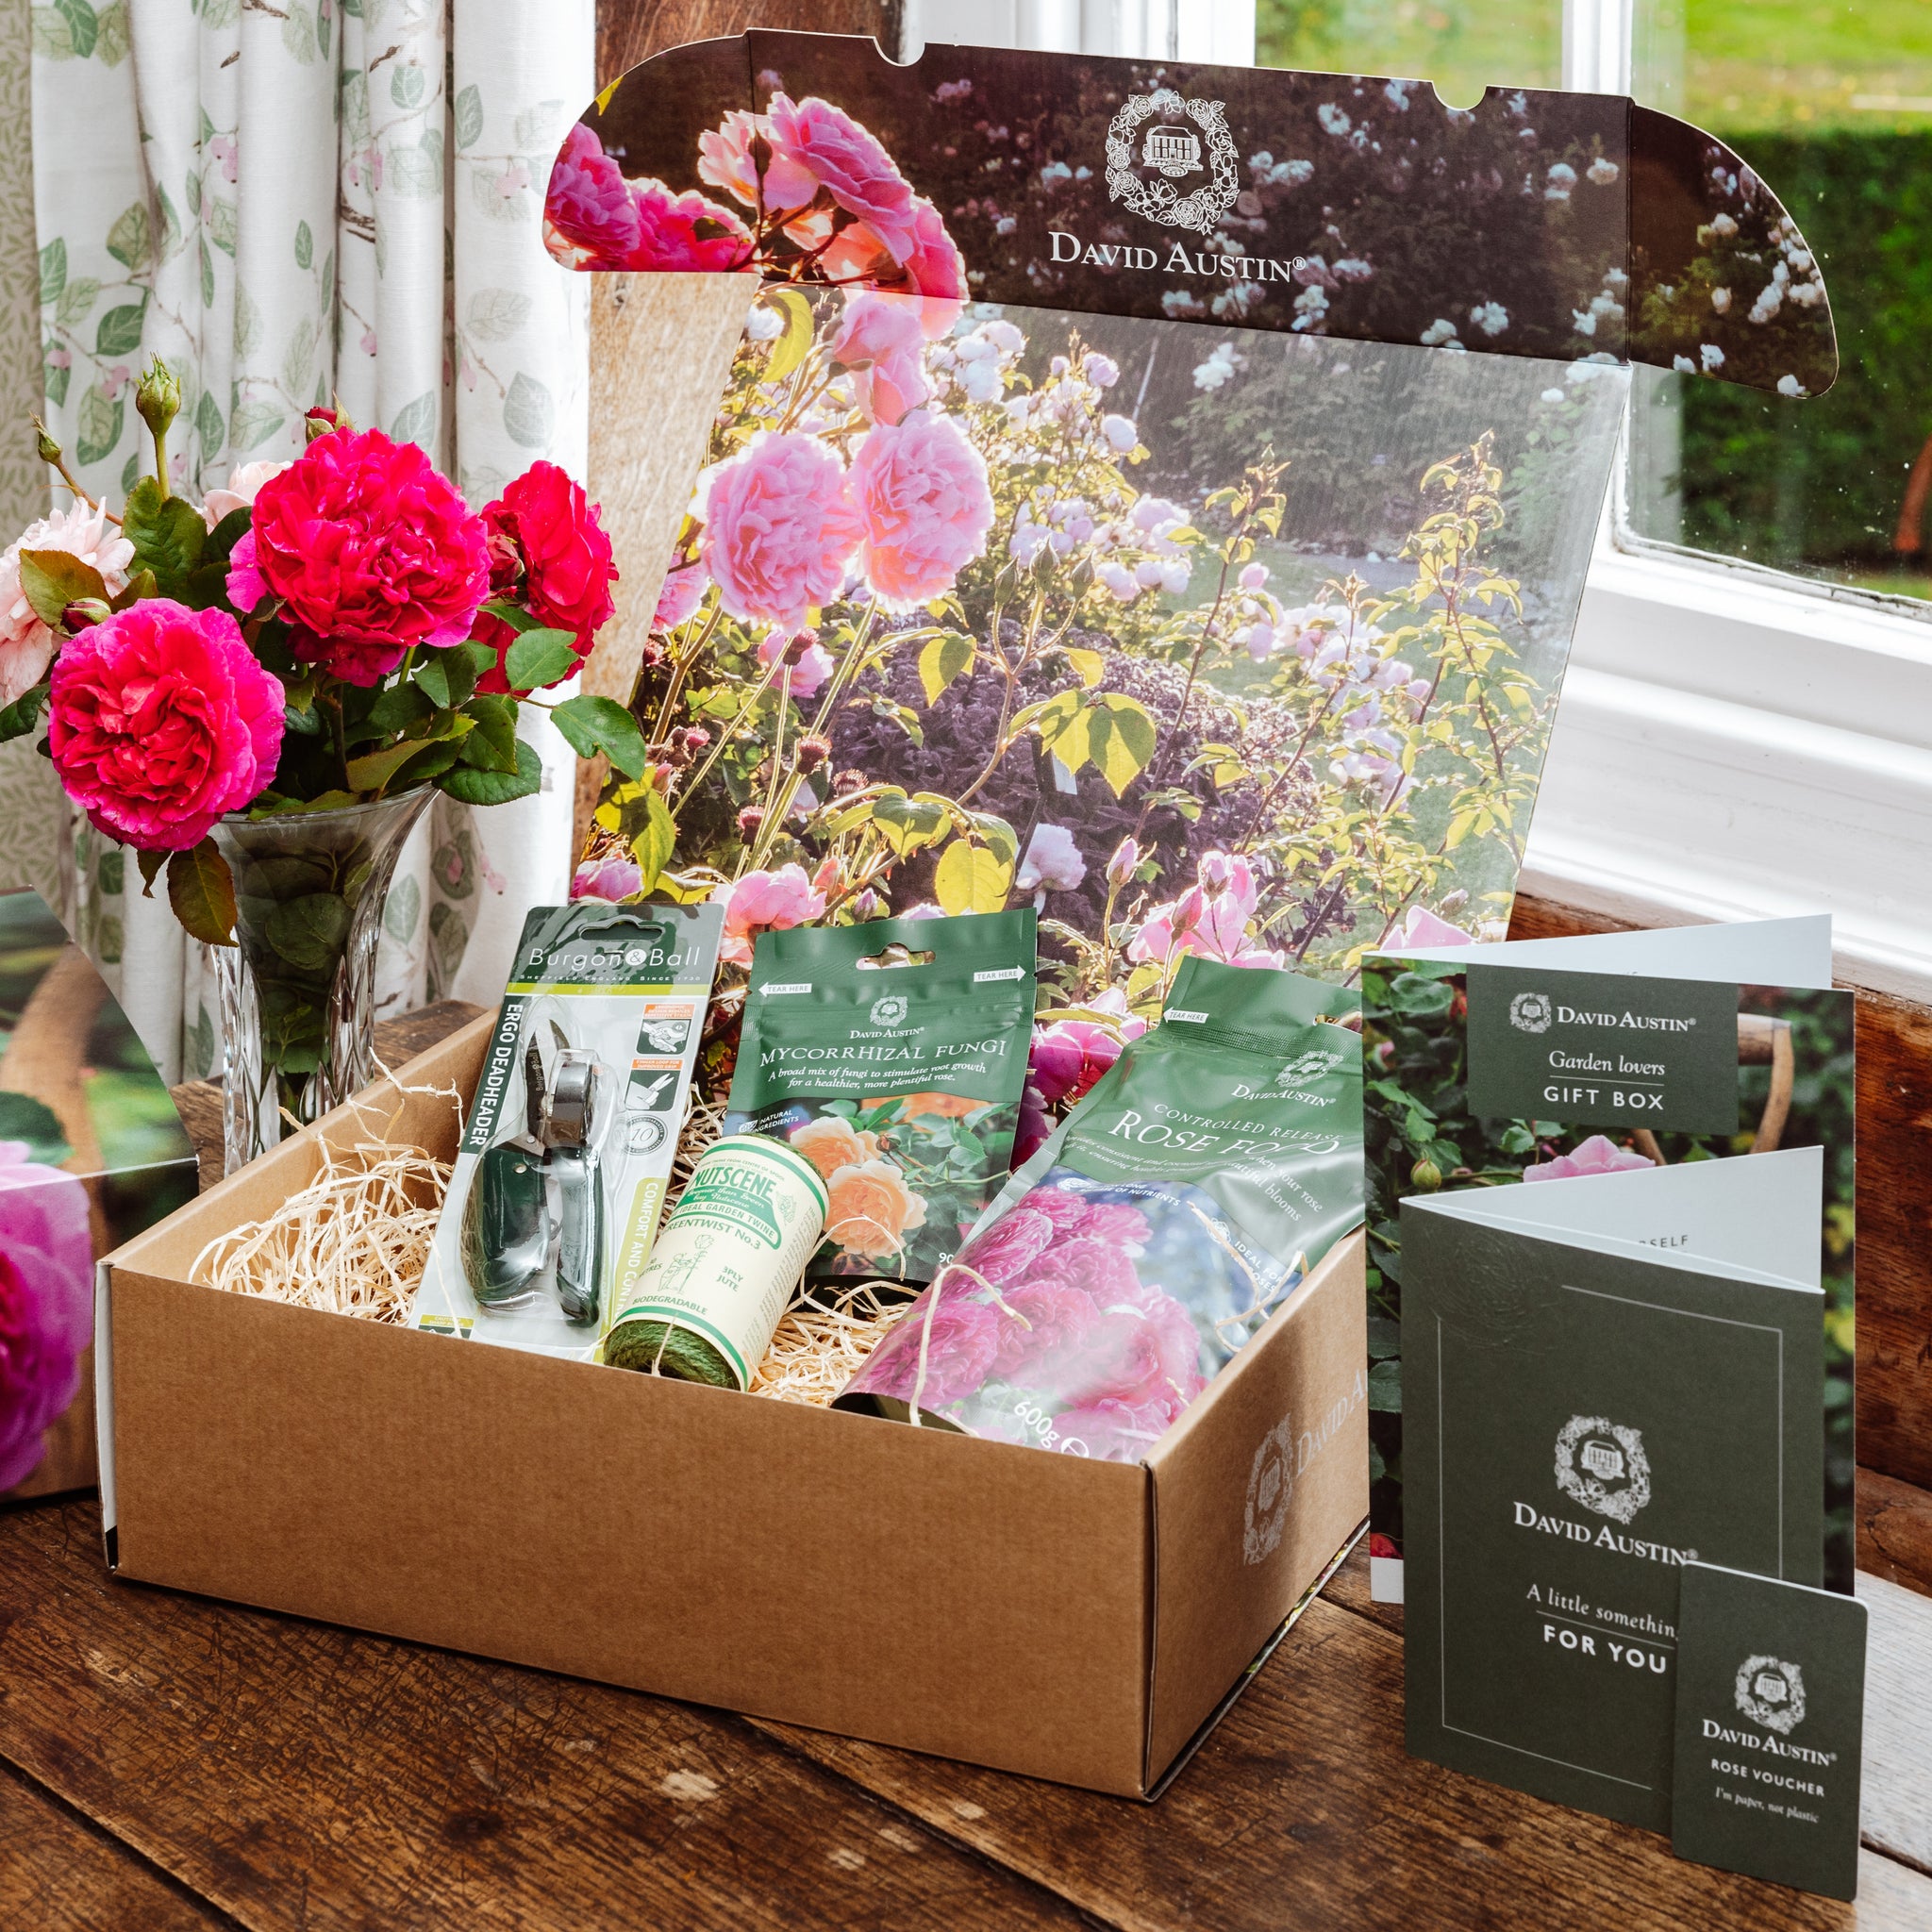 Garden Lovers gift box